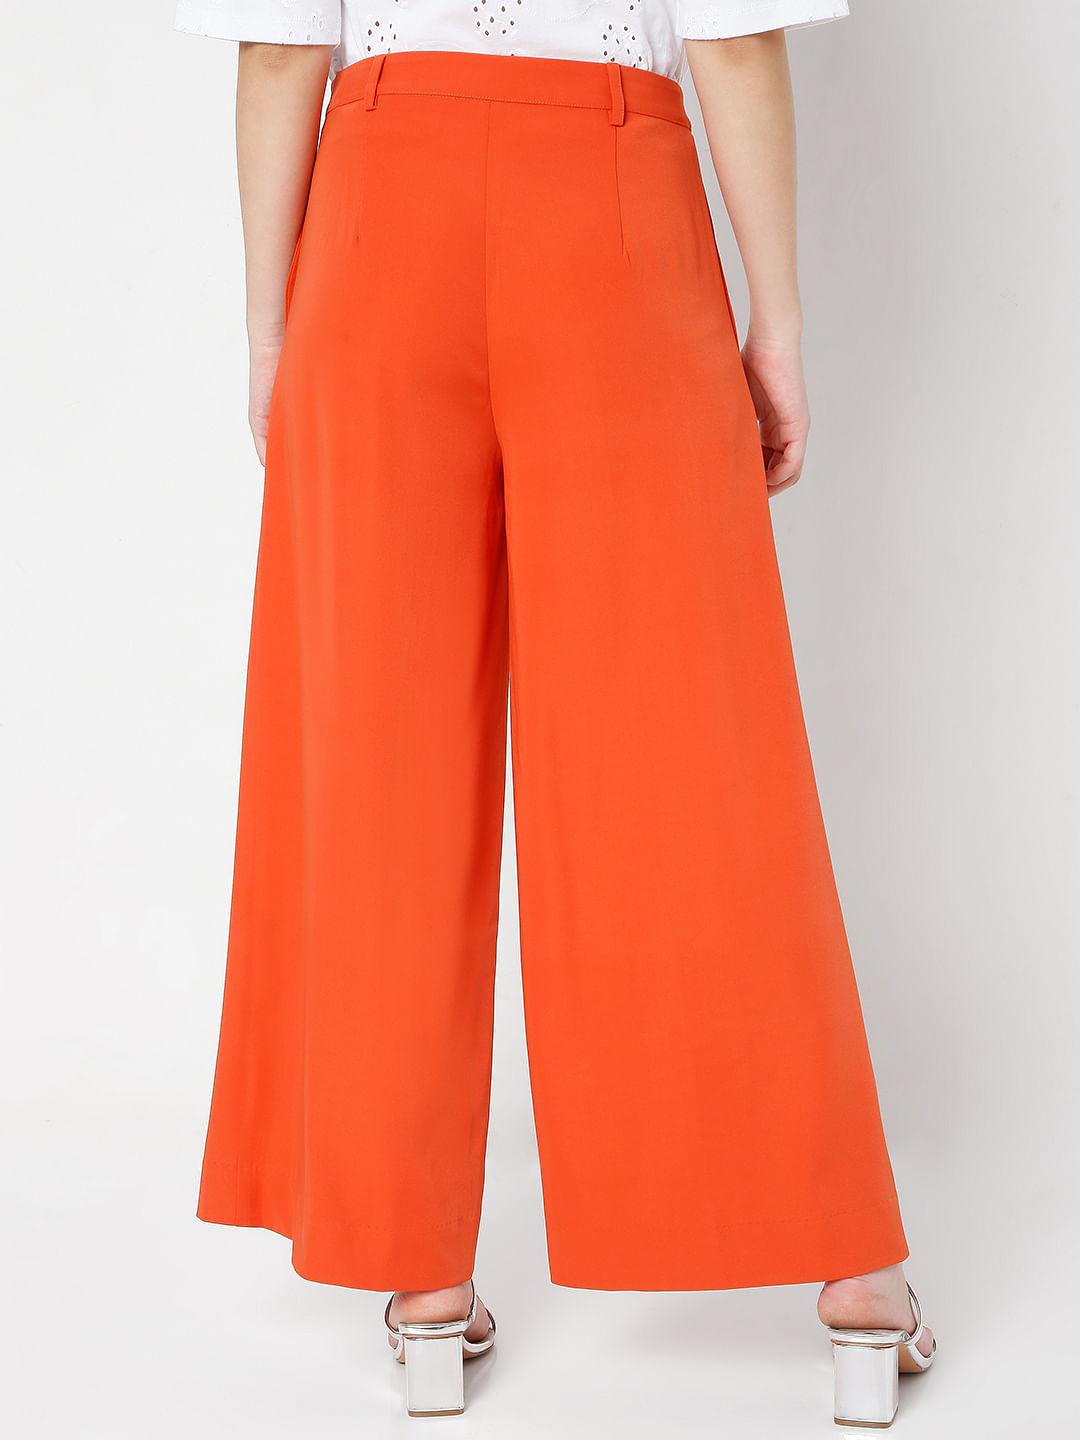 Orange Flared Pants